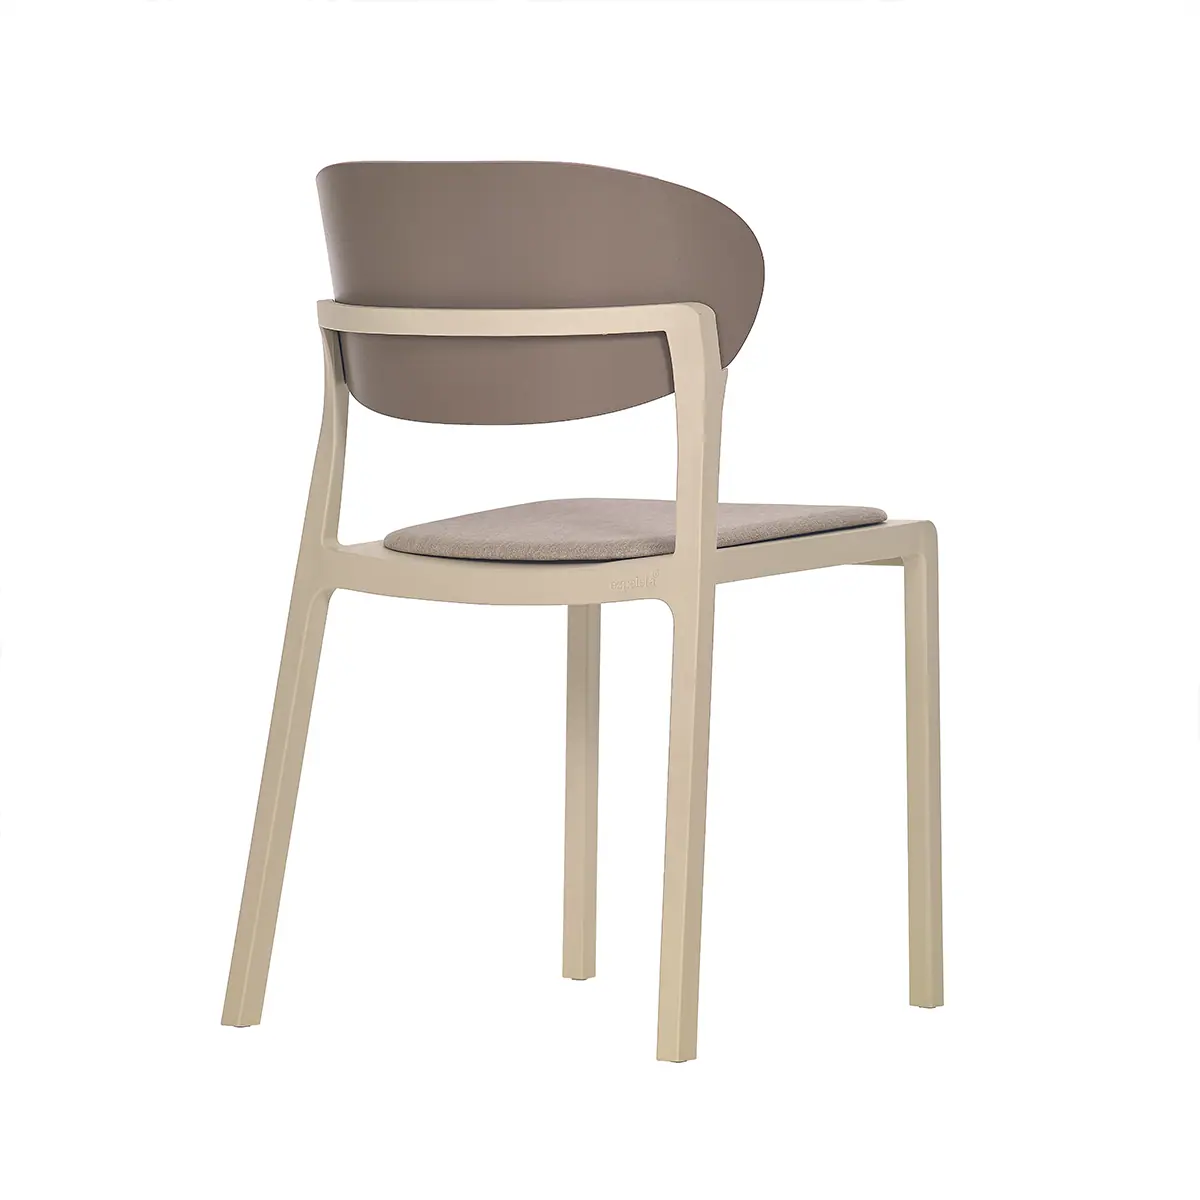 81403-81400-bake-pad-chair